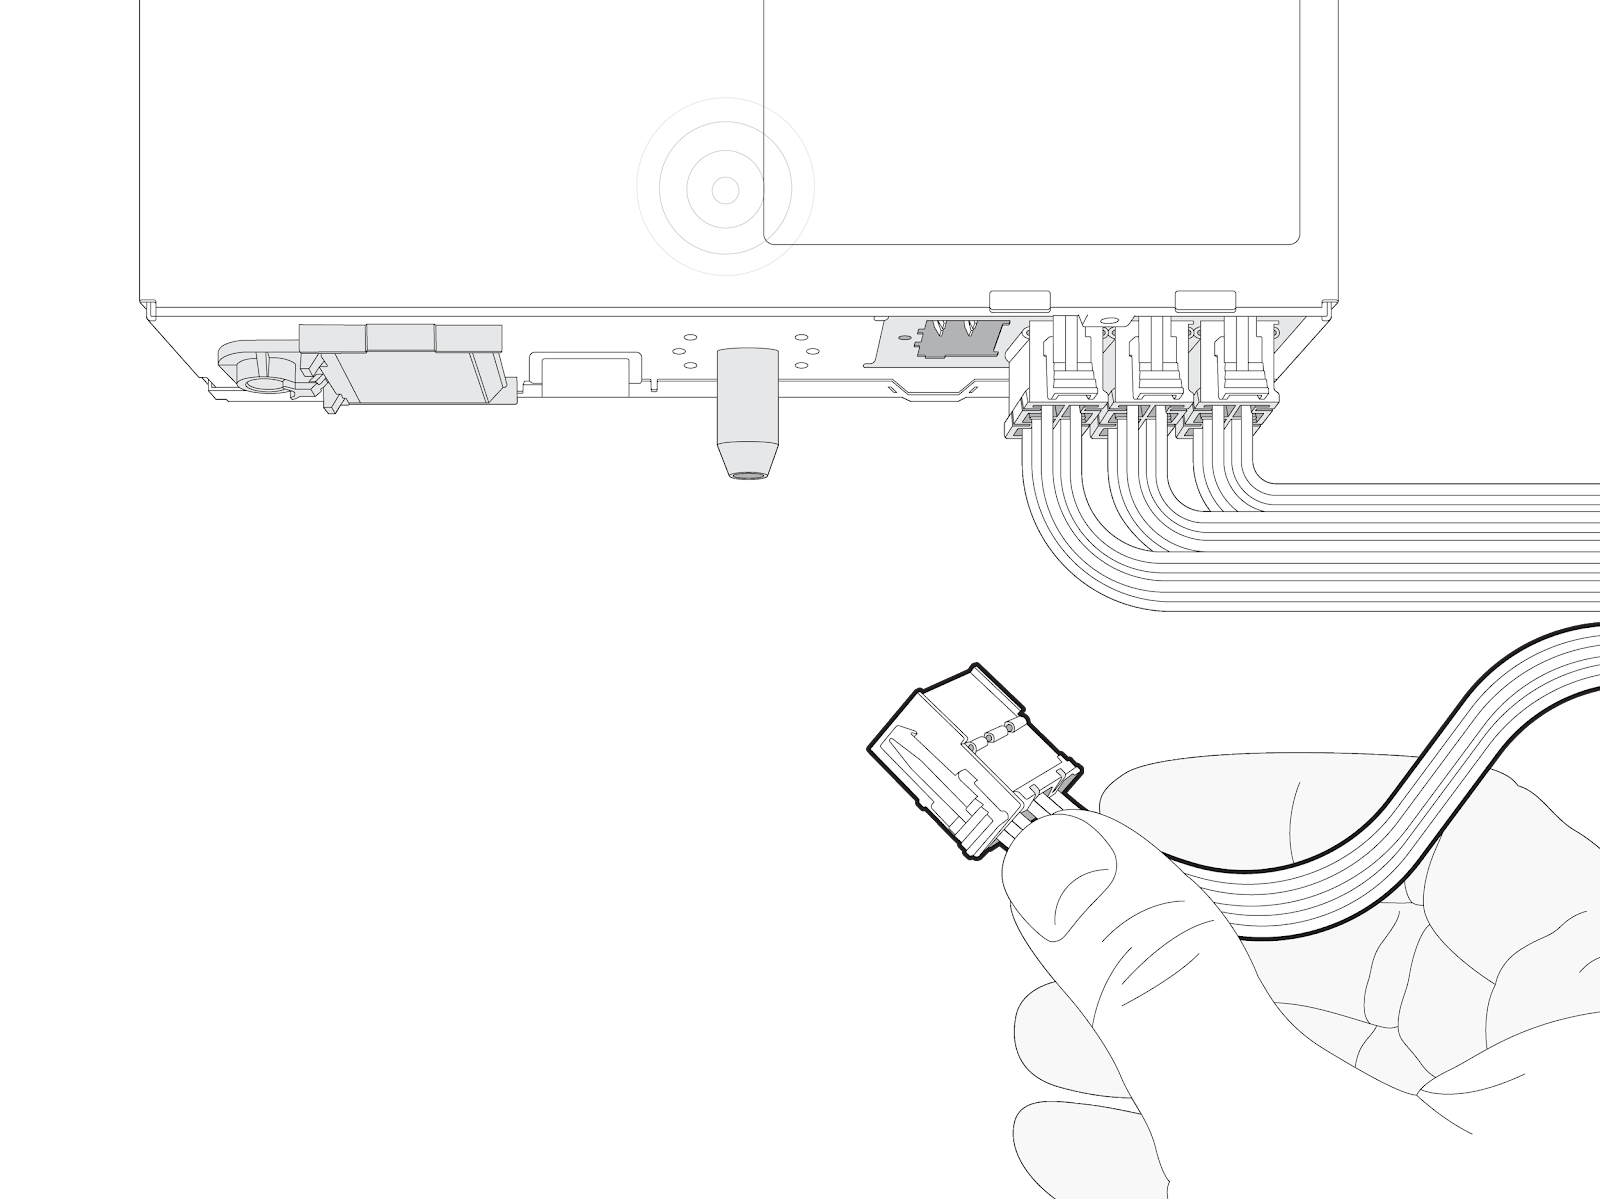 HRN-URTACHO or HRN-URTACHO02 connectors plugged into tachograph